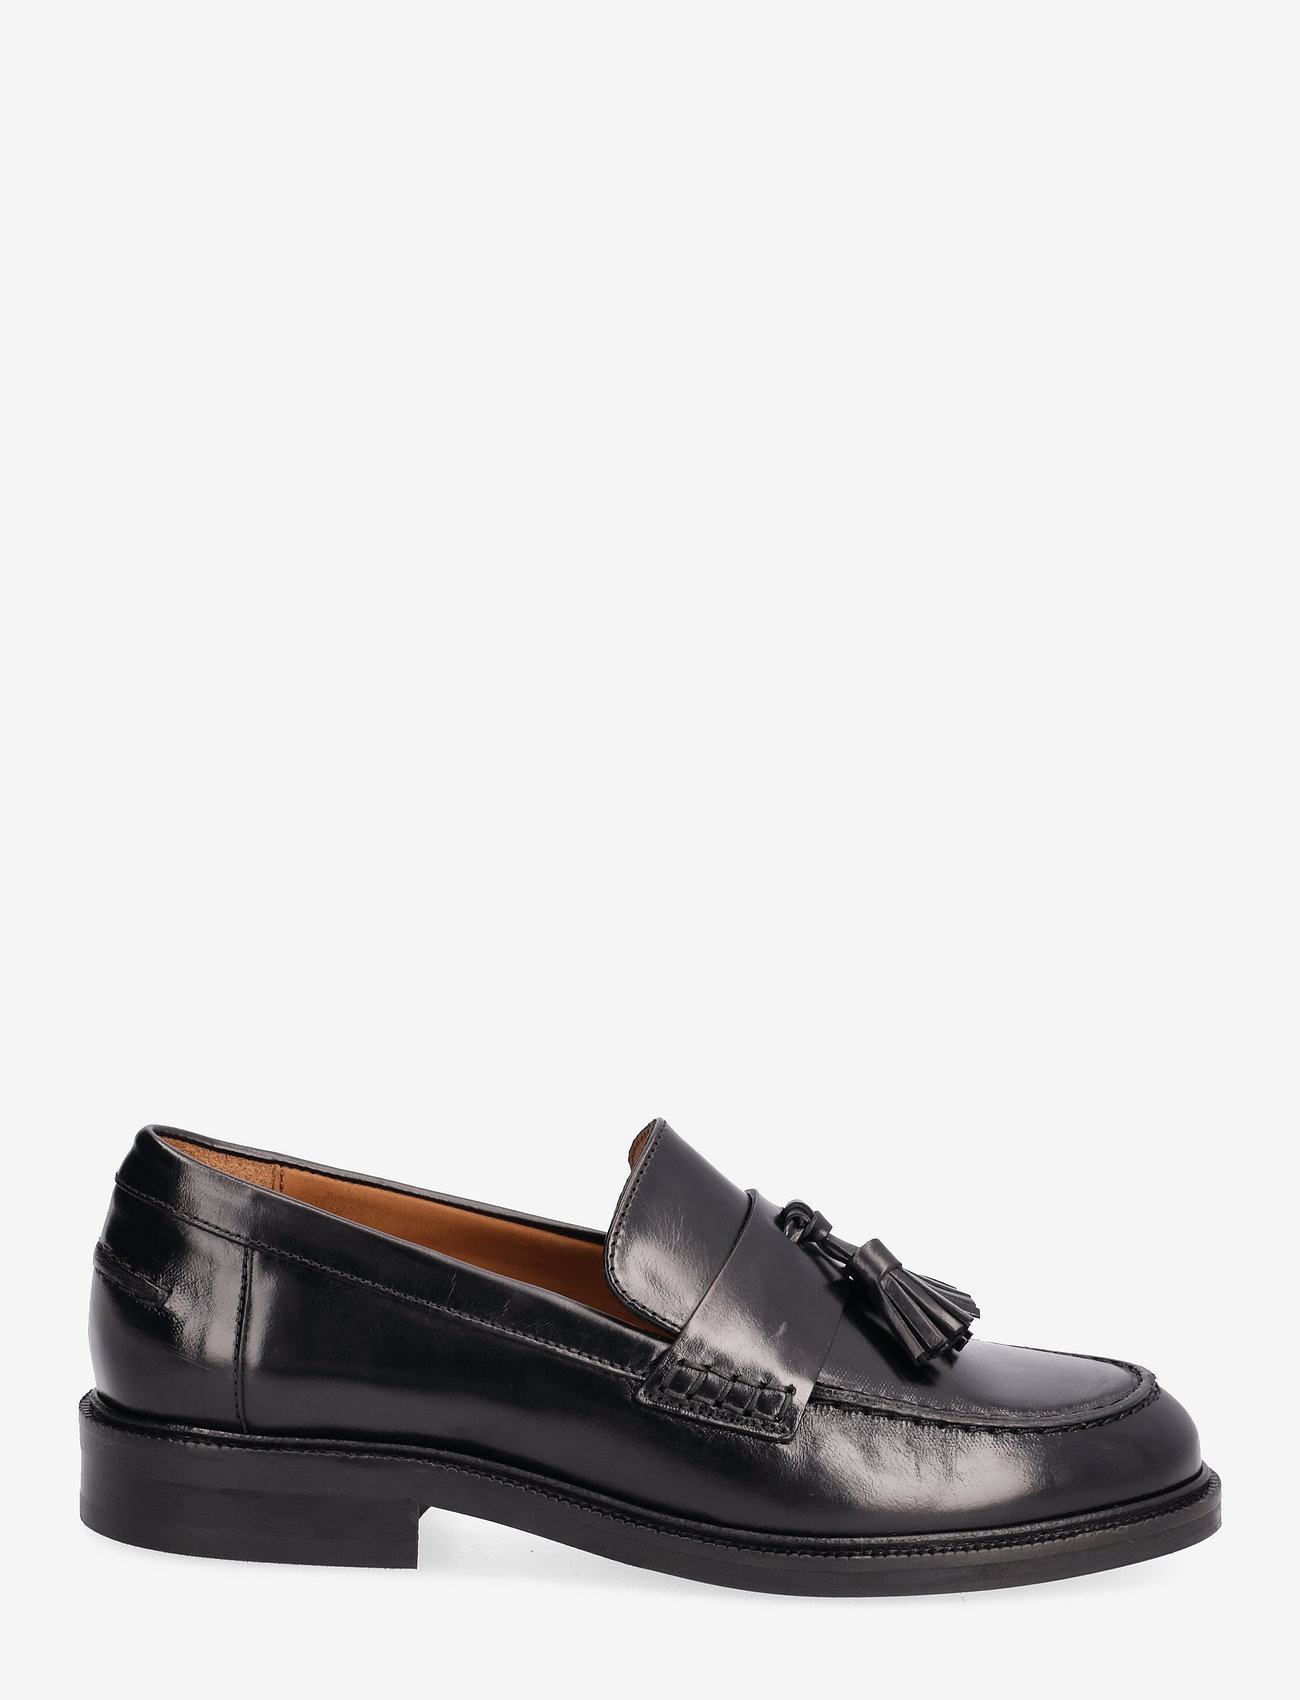 Billi Bi - Shoes - nordic style - black desire calf 80 - 1